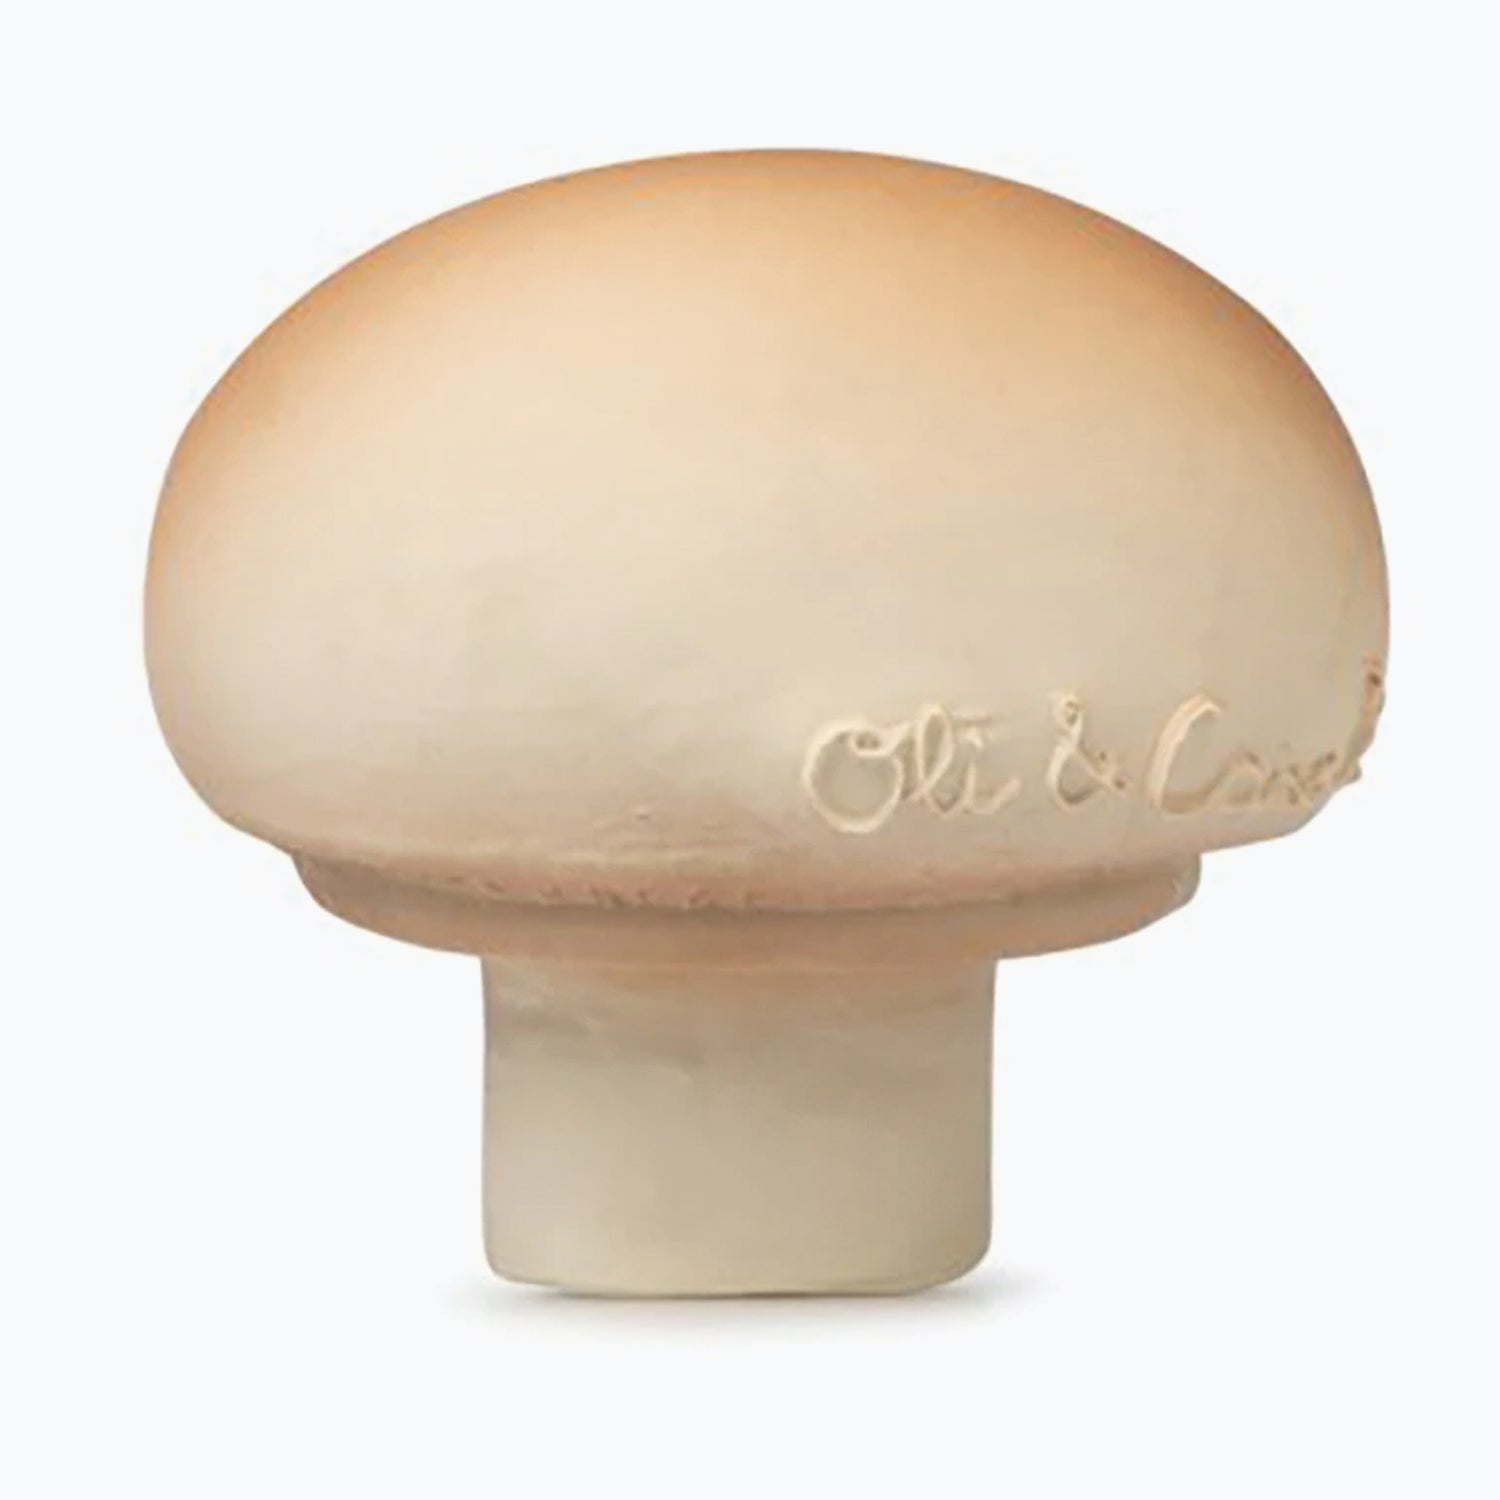 An image of Baby Teether - Chewable Teether - Manolo The Mushroom | Oli & Carol